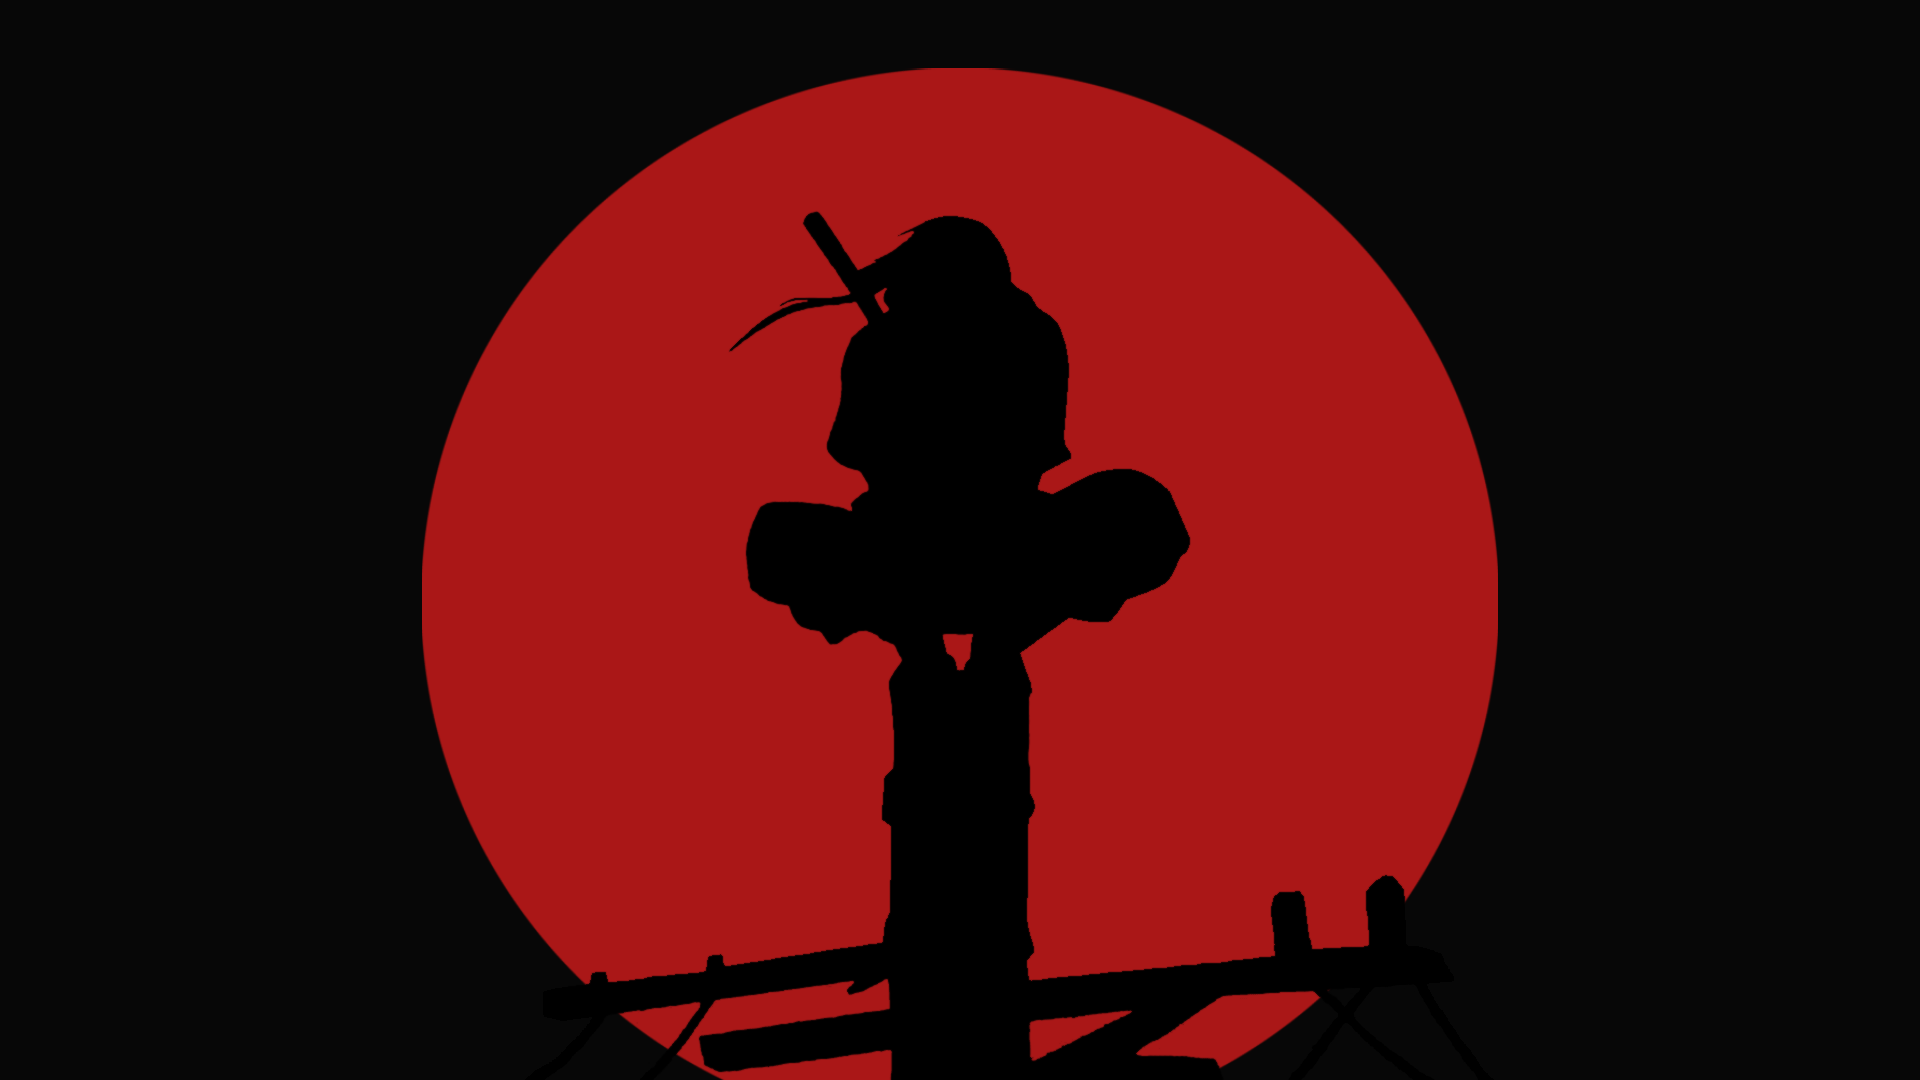 Naruto Anime Uchiha Itachi Moon Red Moon Frontal View Red 1920x1080